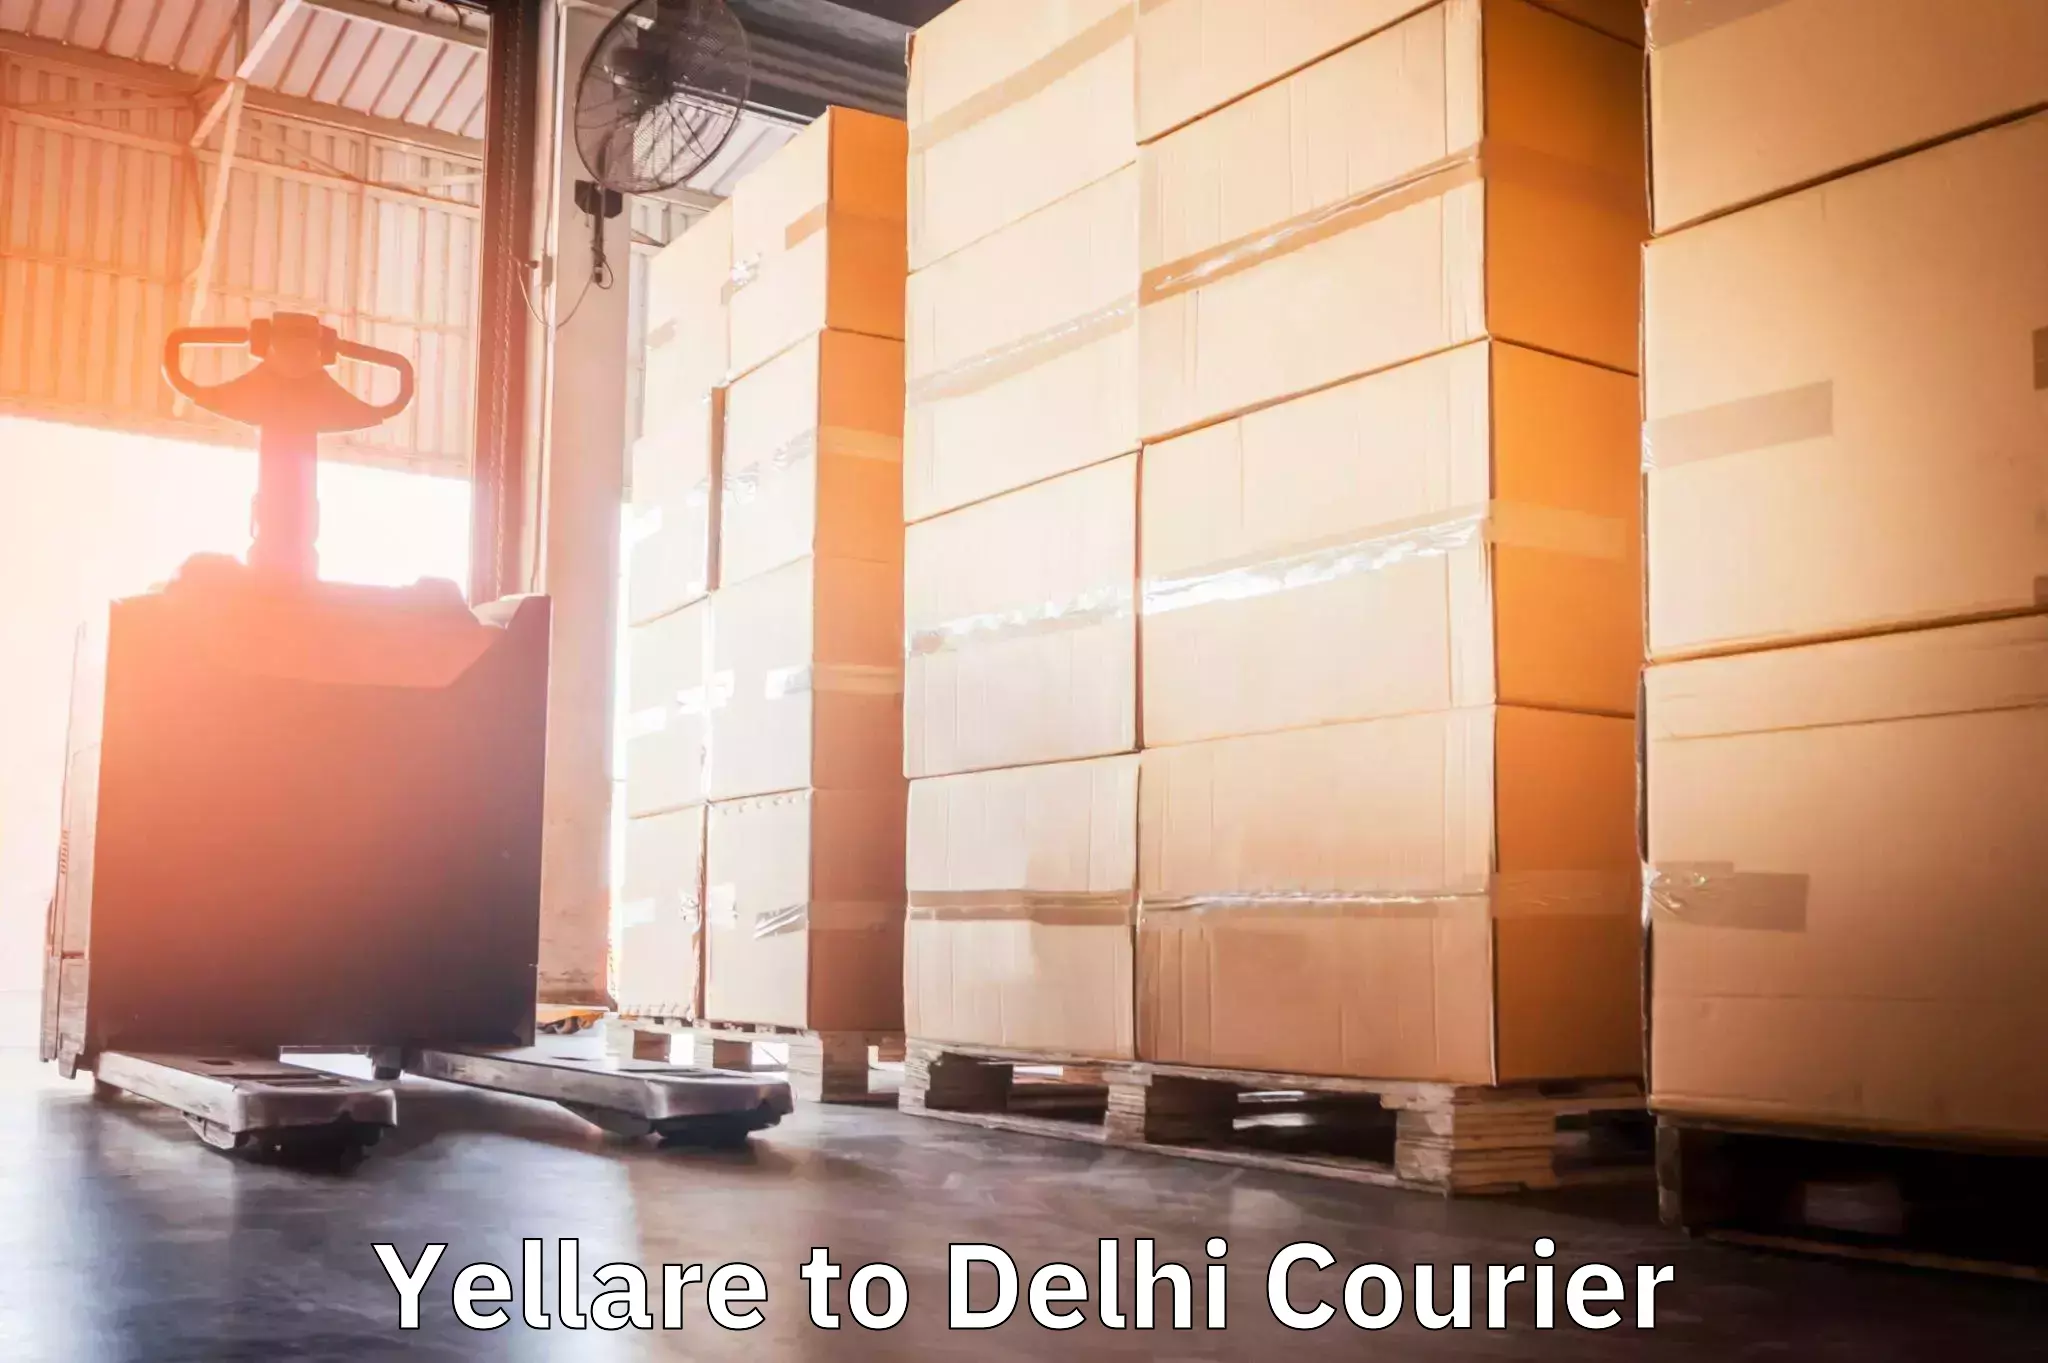 Global logistics network Yellare to Delhi